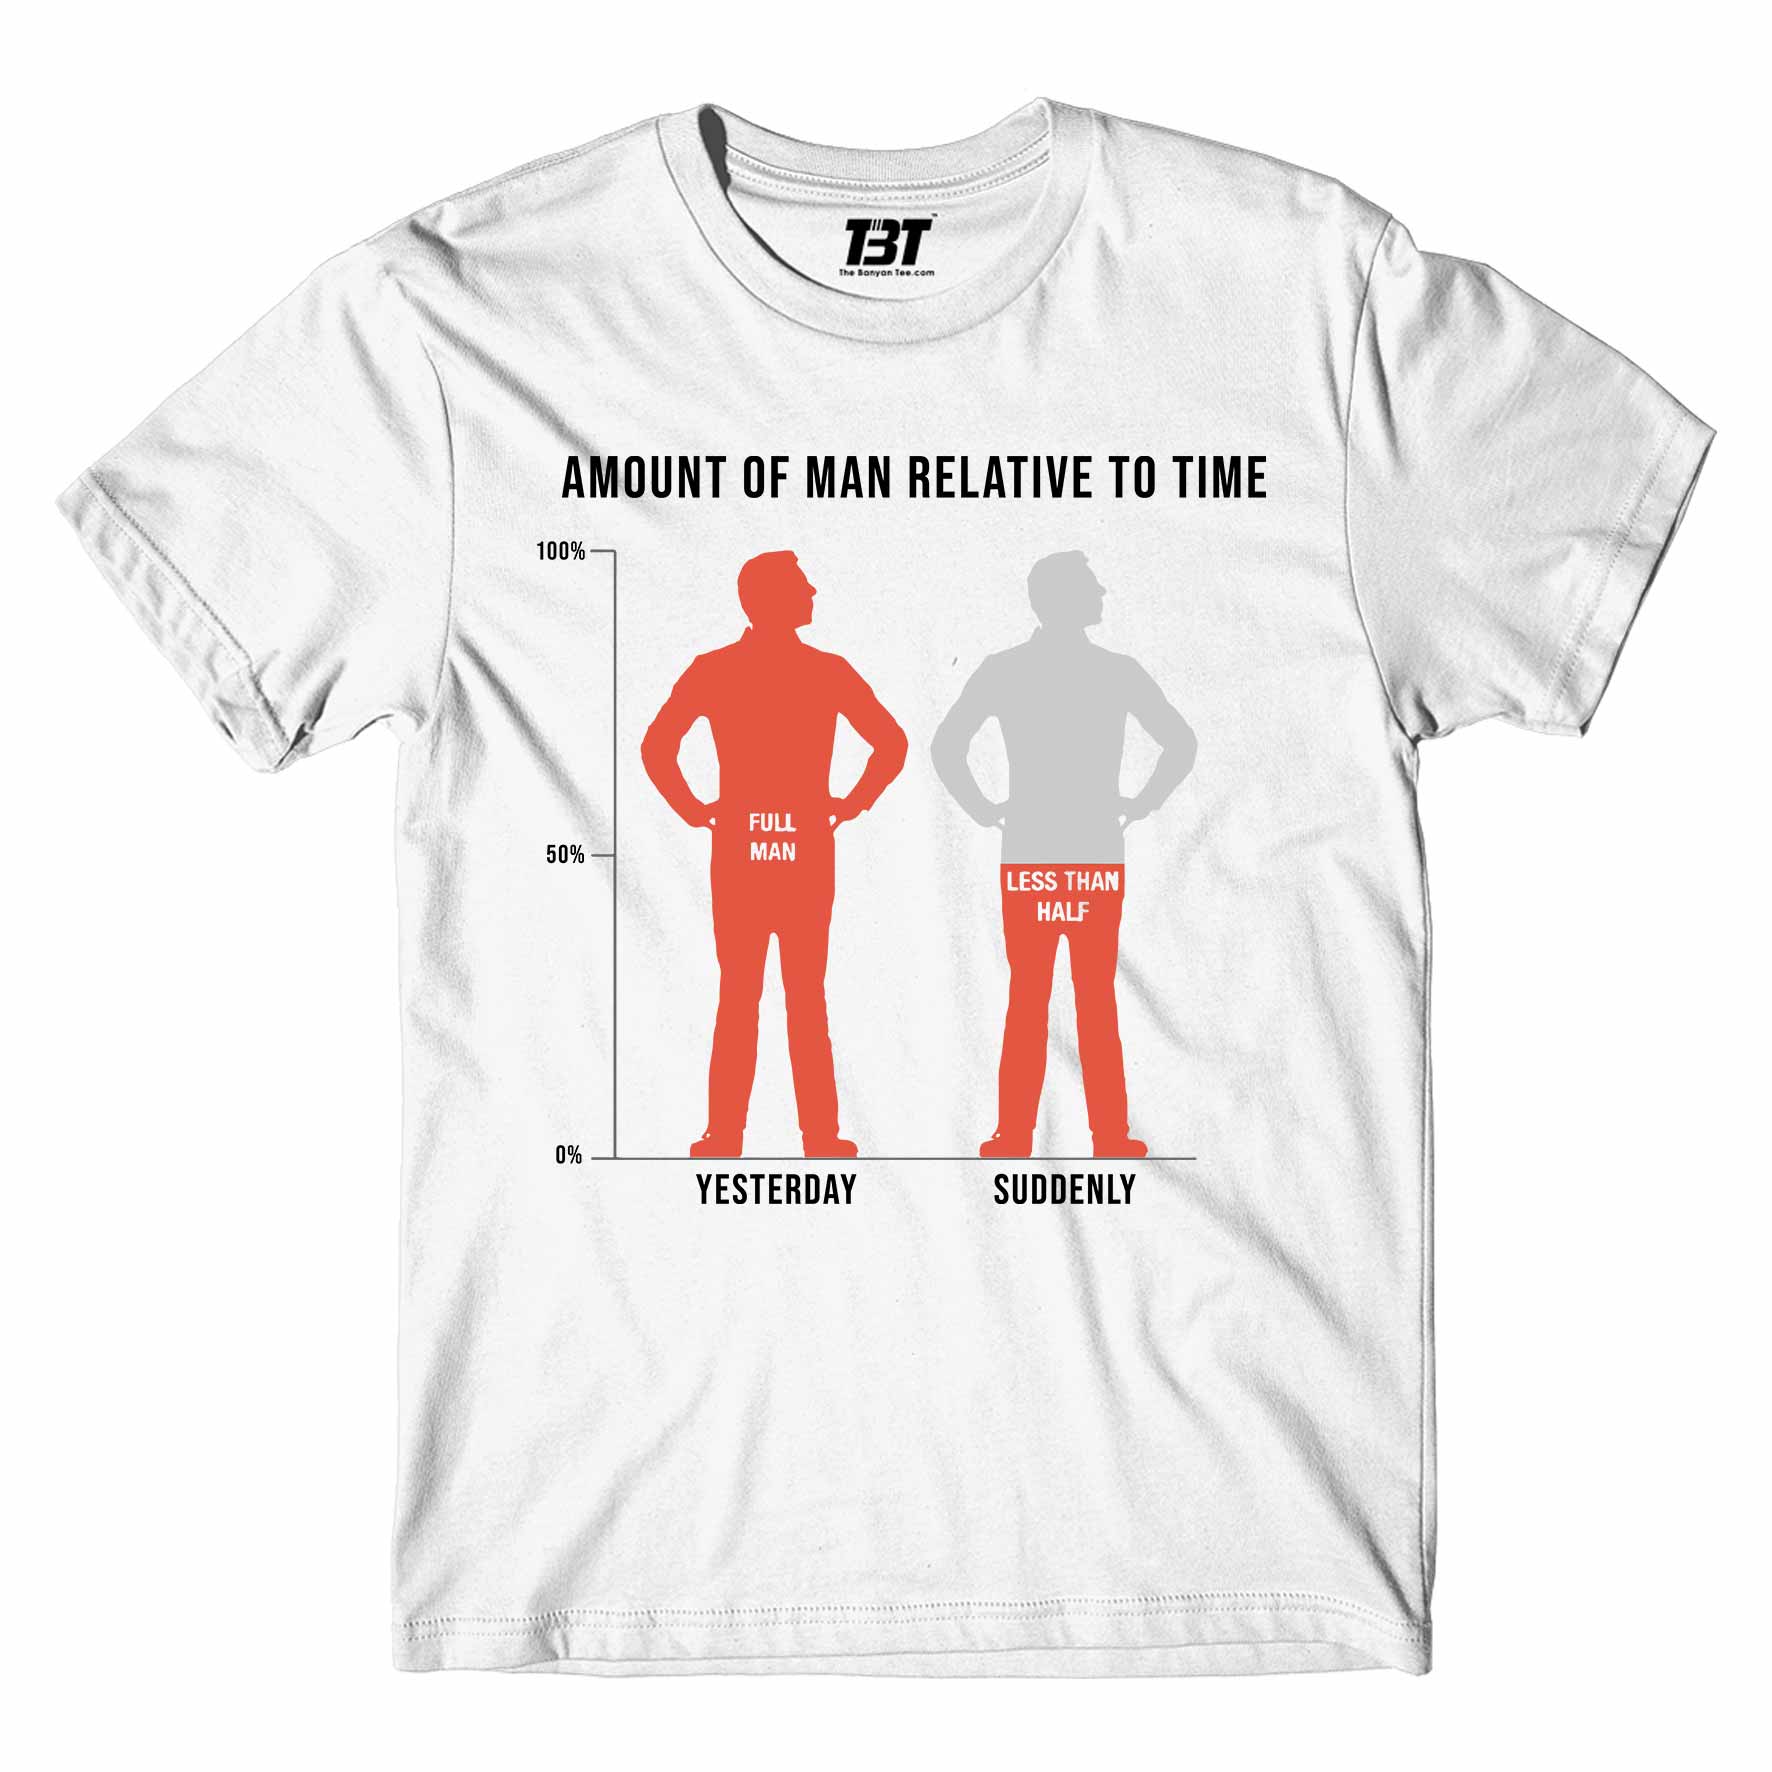 Yesterday The Beatles T-shirt - T-shirt The Banyan Tee TBT shirt for men women boys designer stylish online cotton india